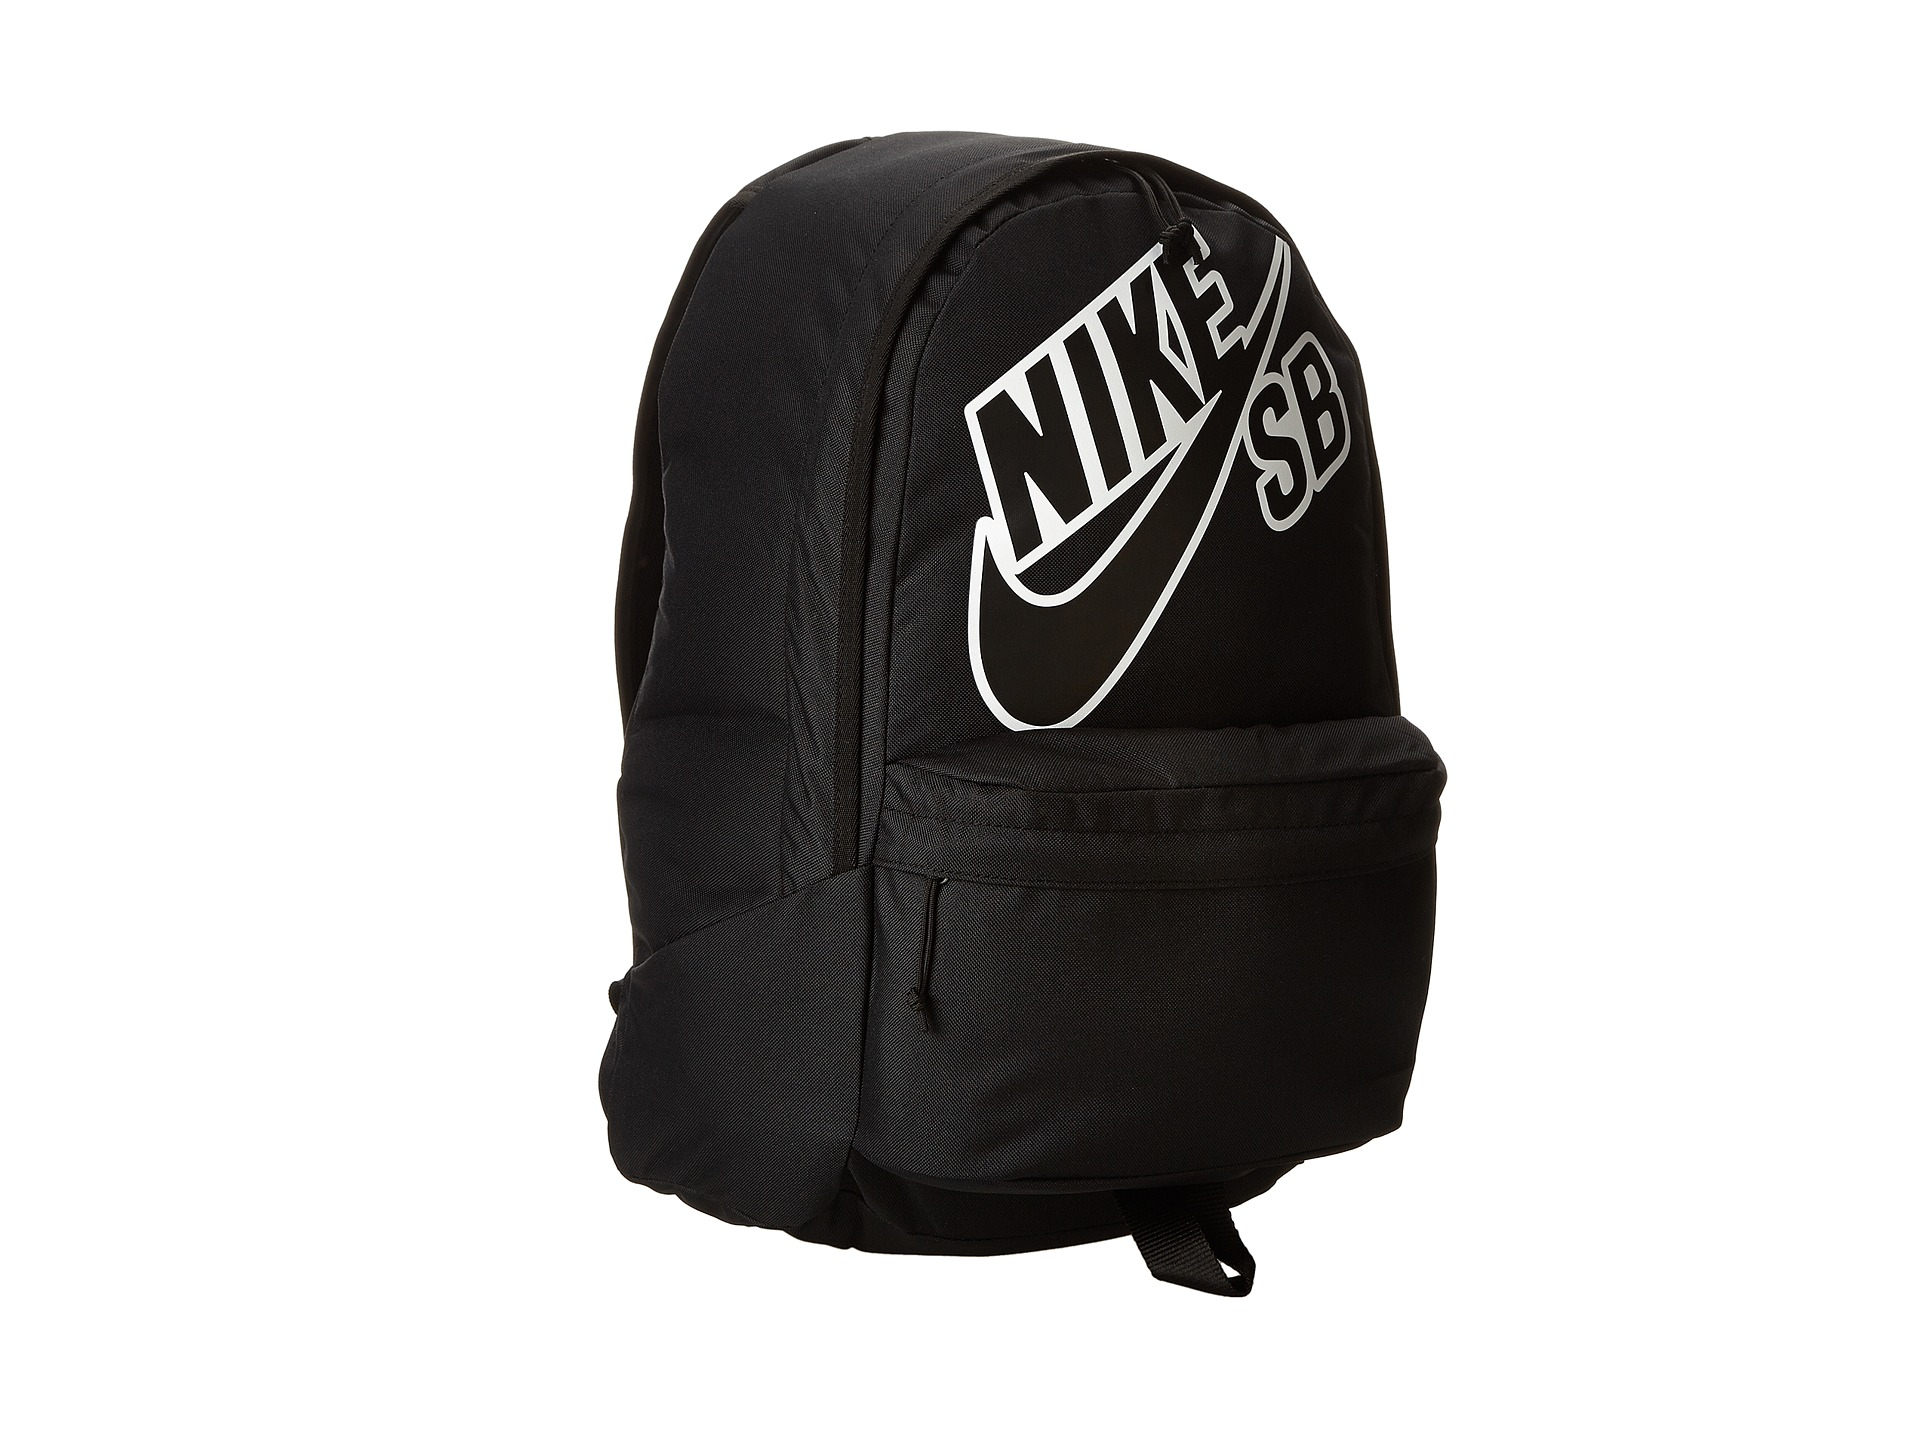 Nike Synthetic Piedmont Backpack in Black/Black/Black (Black) - Lyst